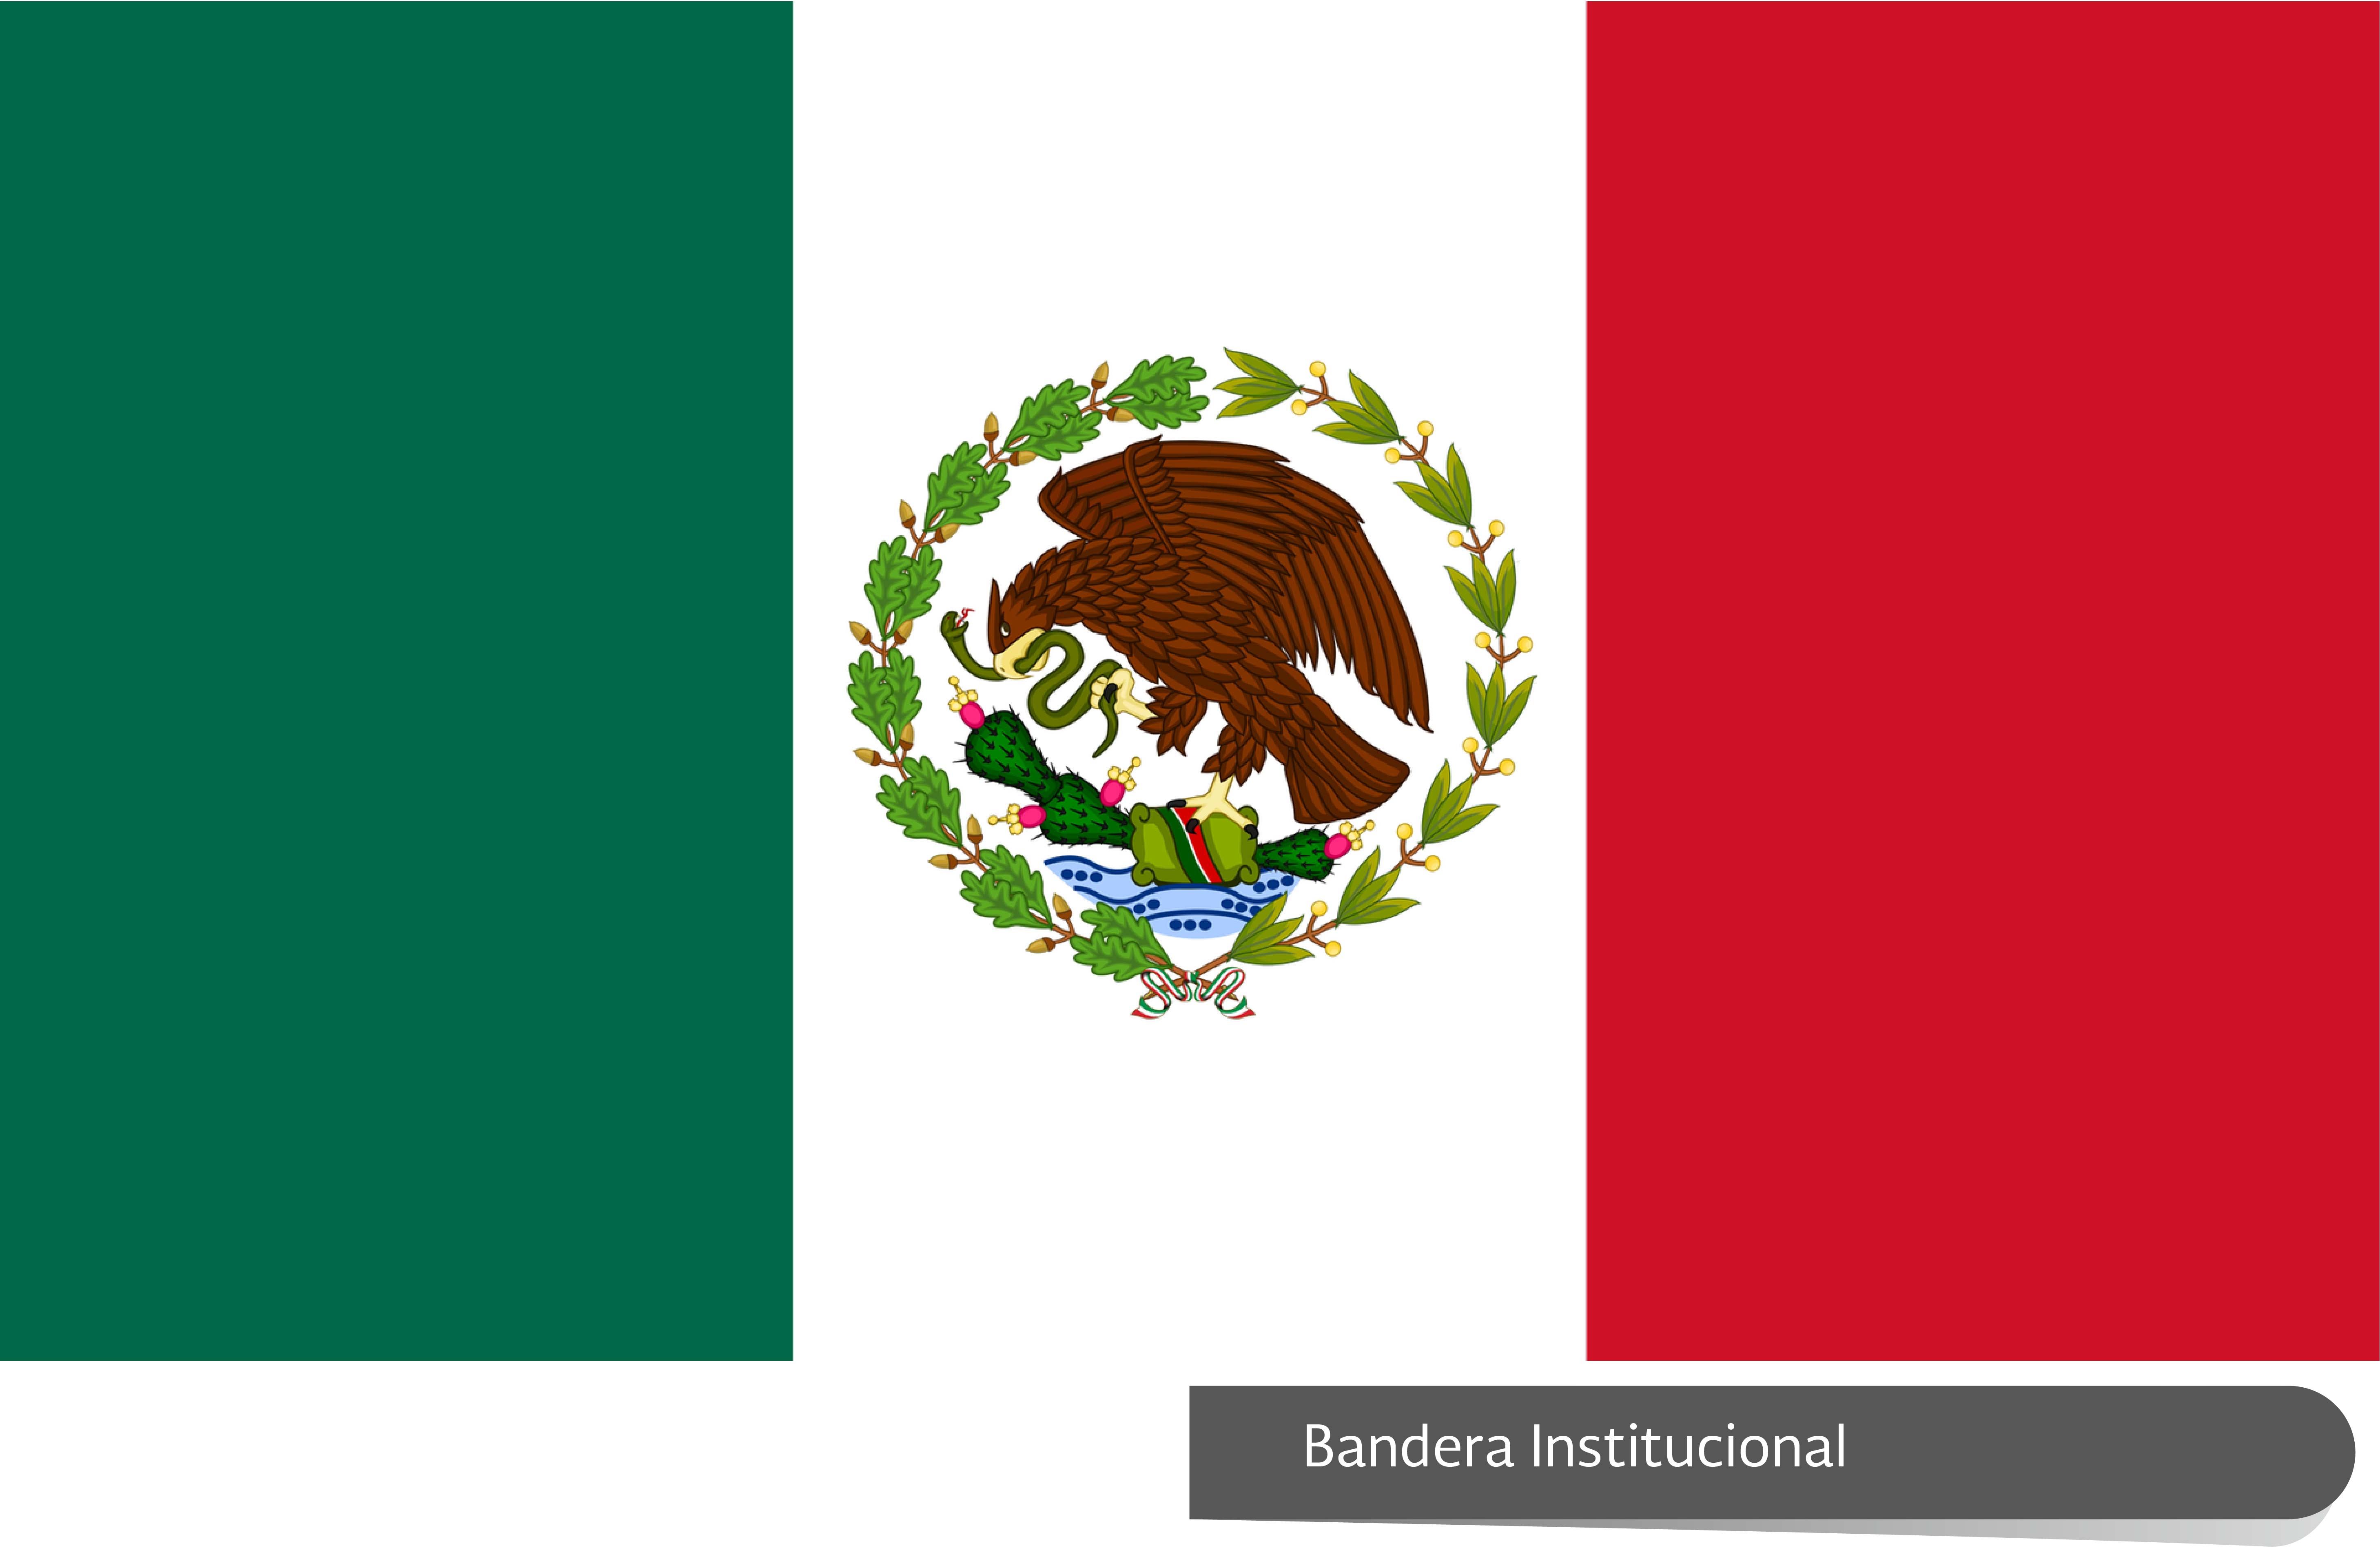 /cms/uploads/image/file/375672/banderasMexico-07.jpg